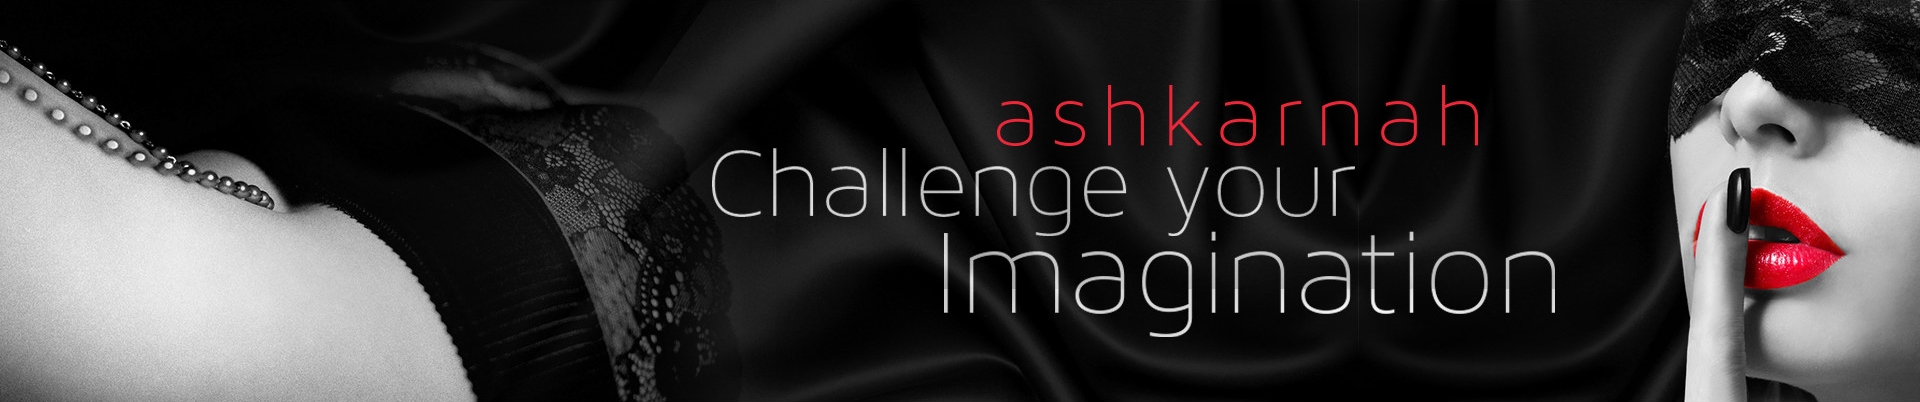 Ashkarnah Challenge your imagination2